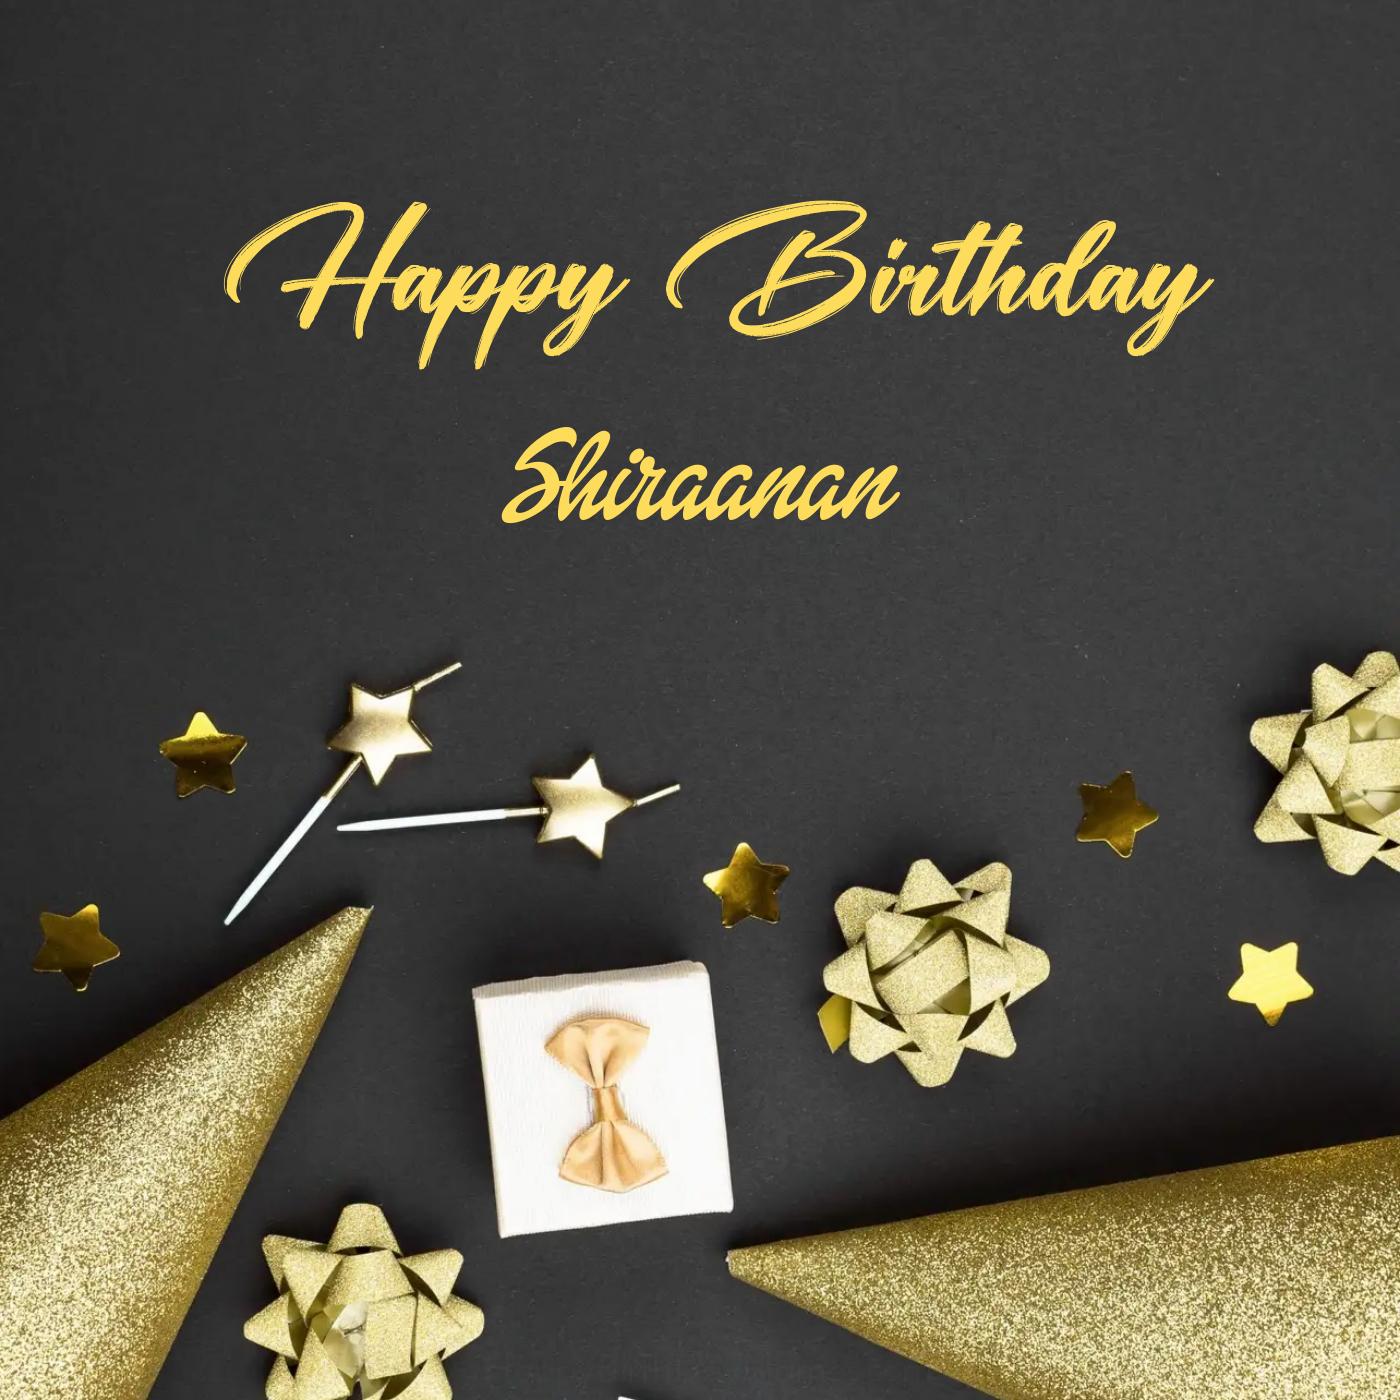 Happy Birthday Shiraanan Golden Theme Card